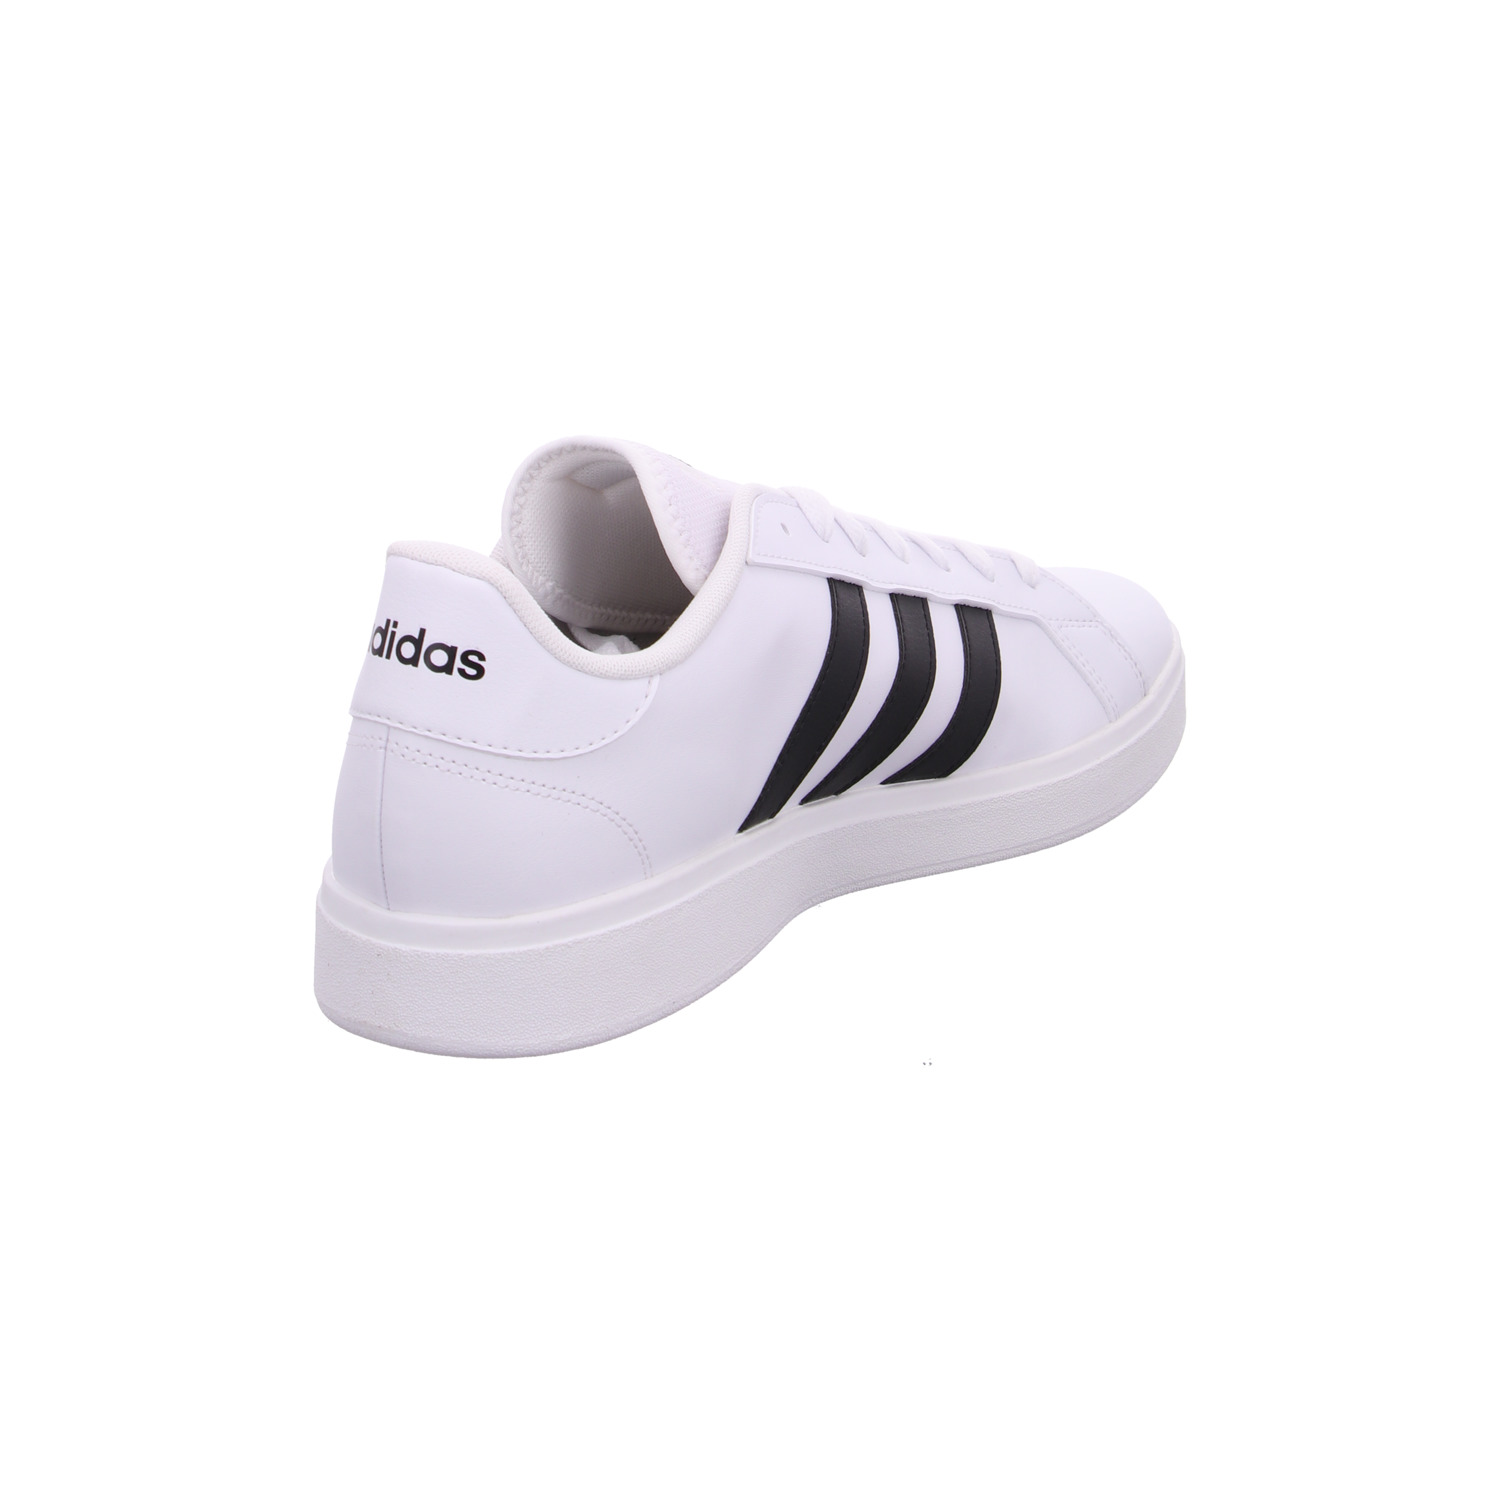 adidas-sneaker-weiß_123900-11